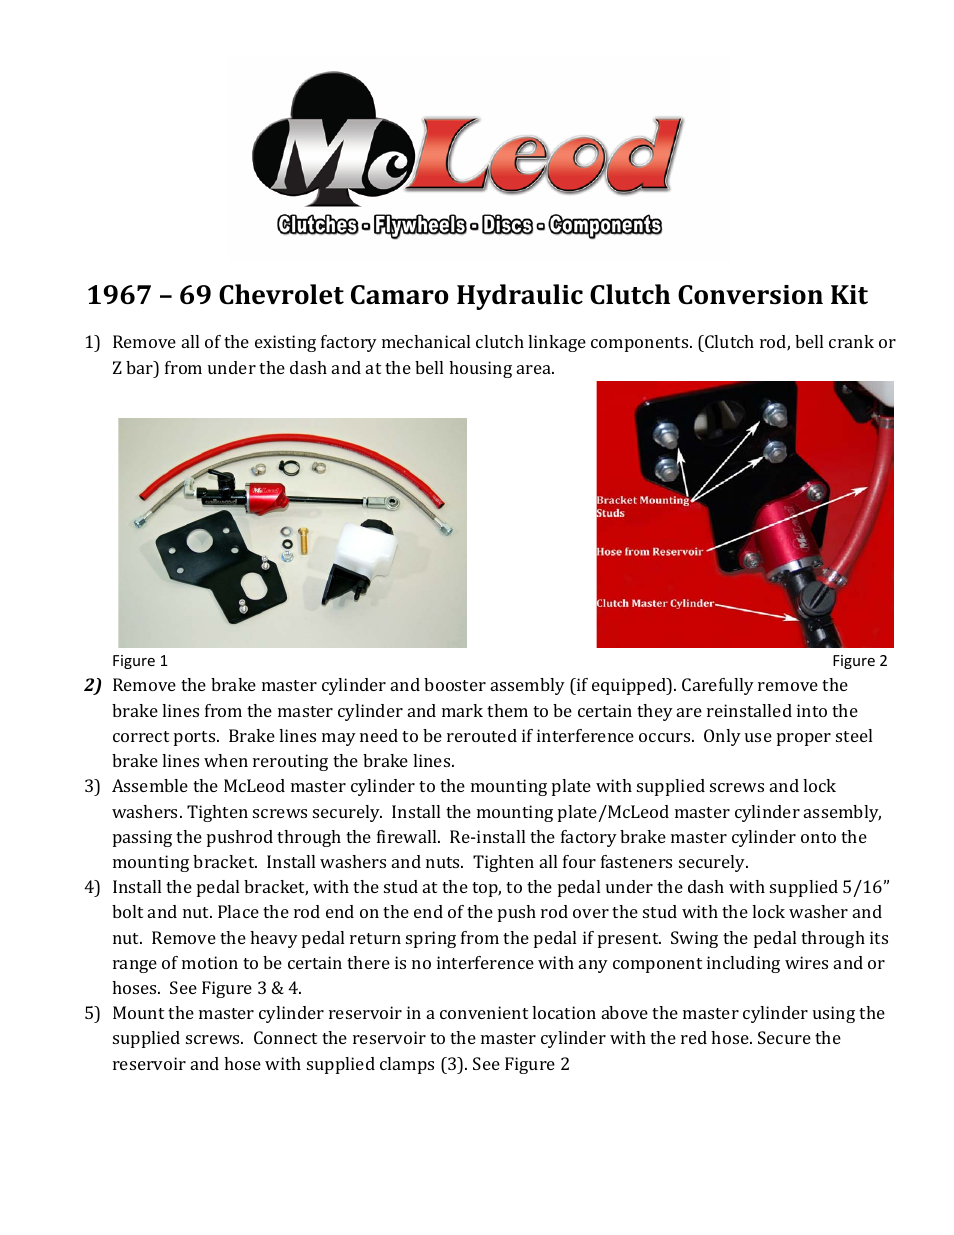 1967-69 Camaro Hydraulic Conversion Instructions